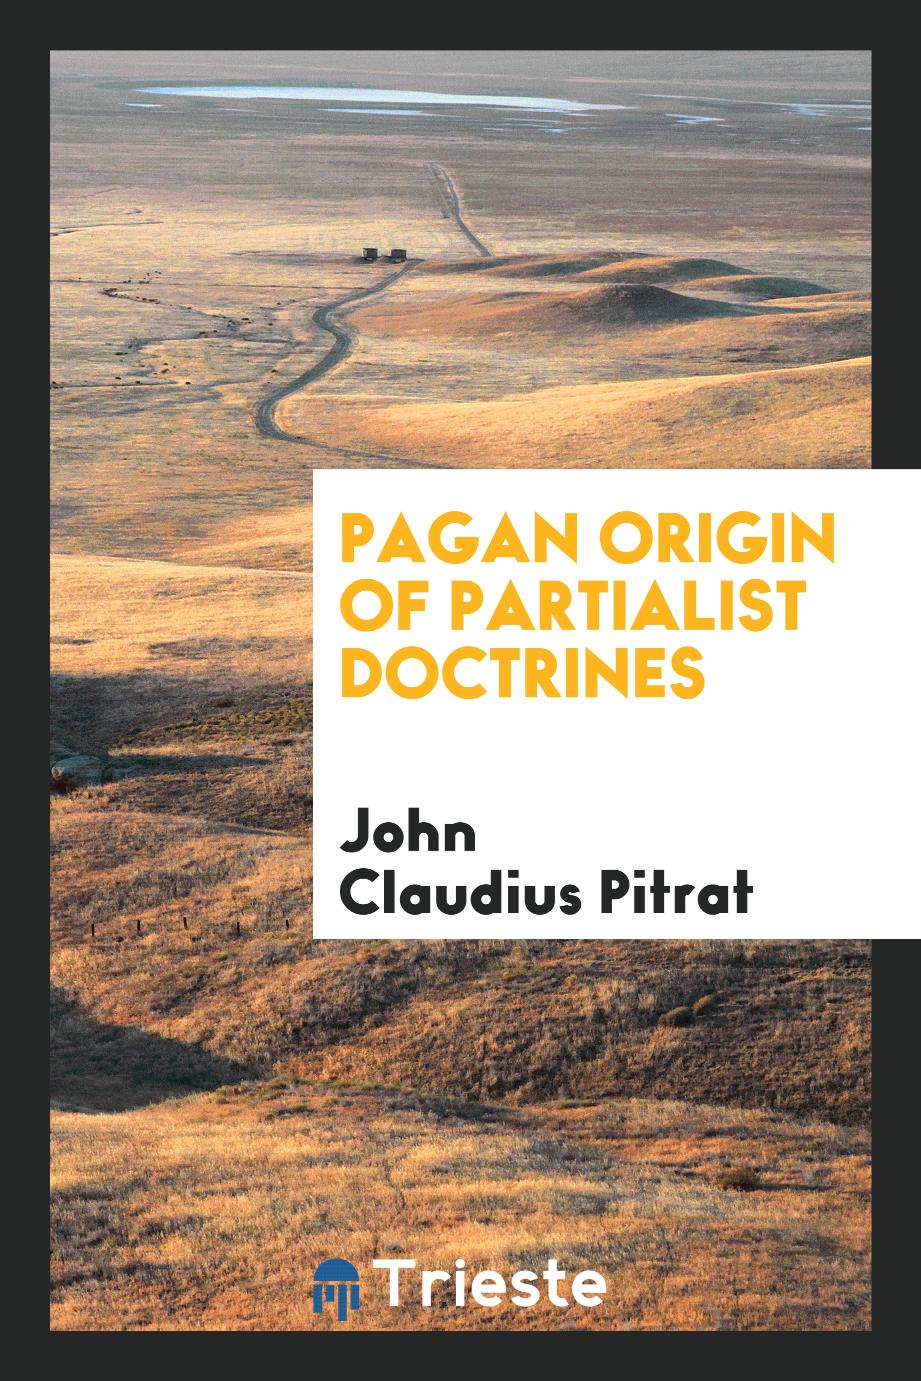 Pagan origin of partialist doctrines